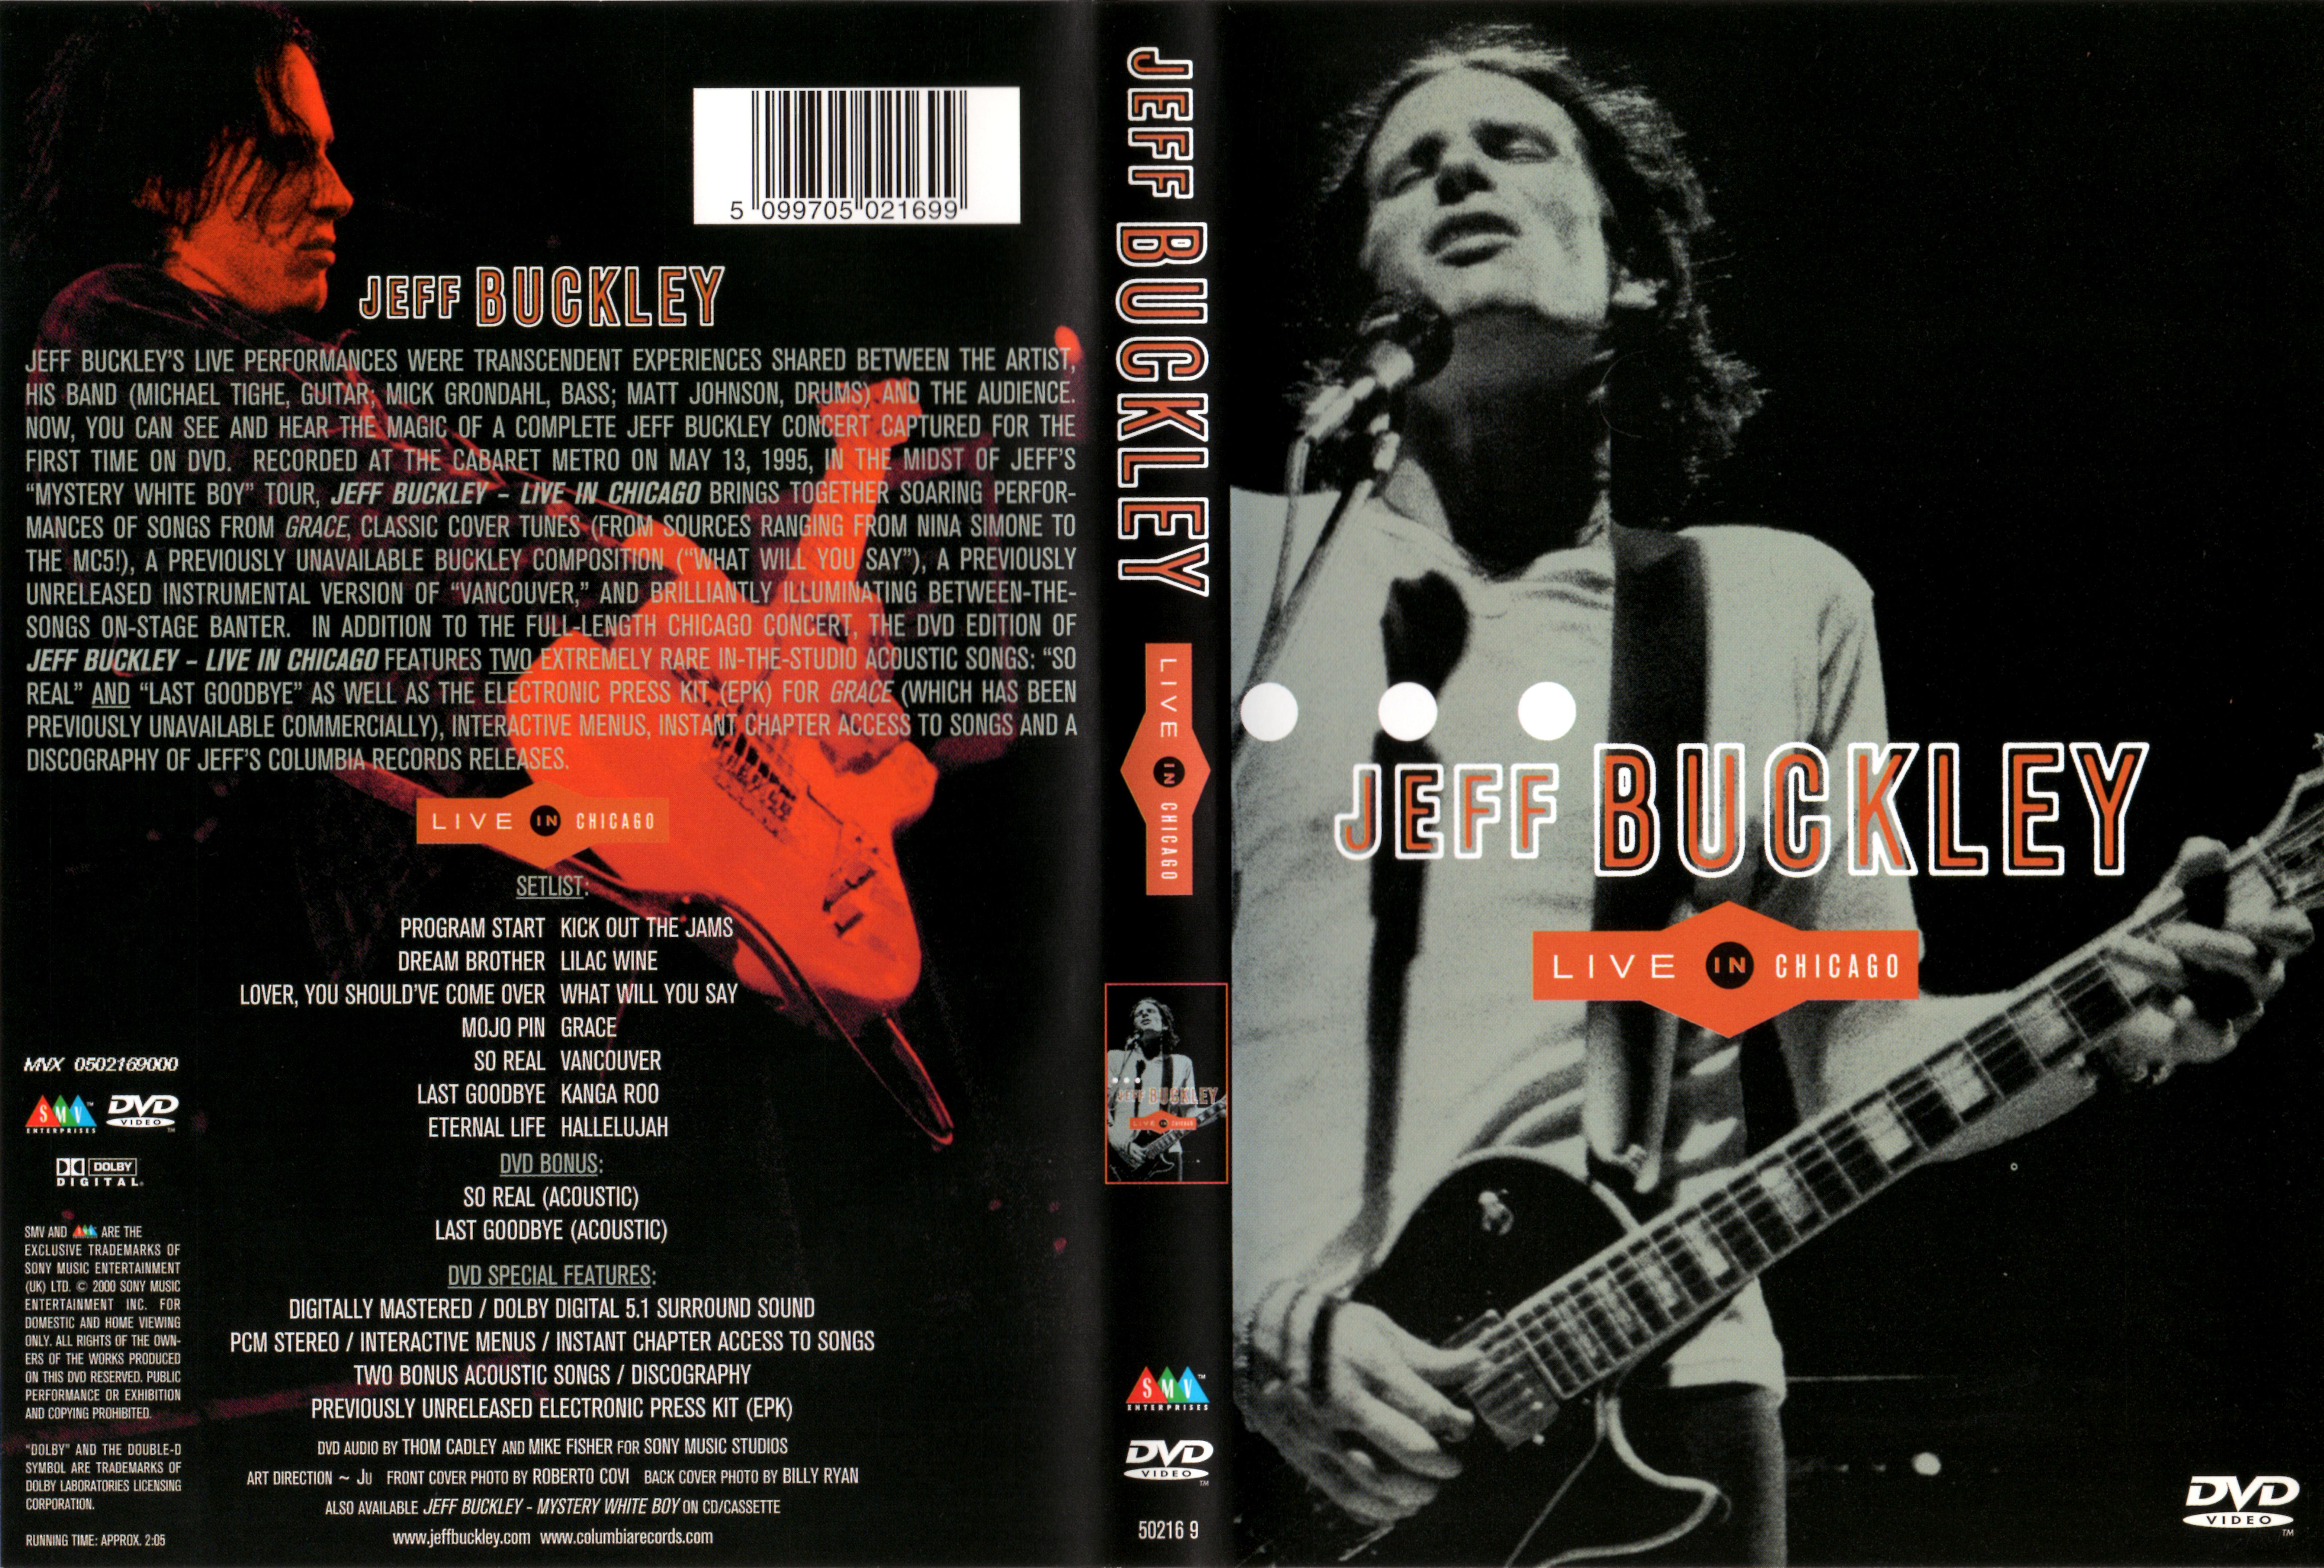 Jaquette DVD Jeff Buckley live chicago